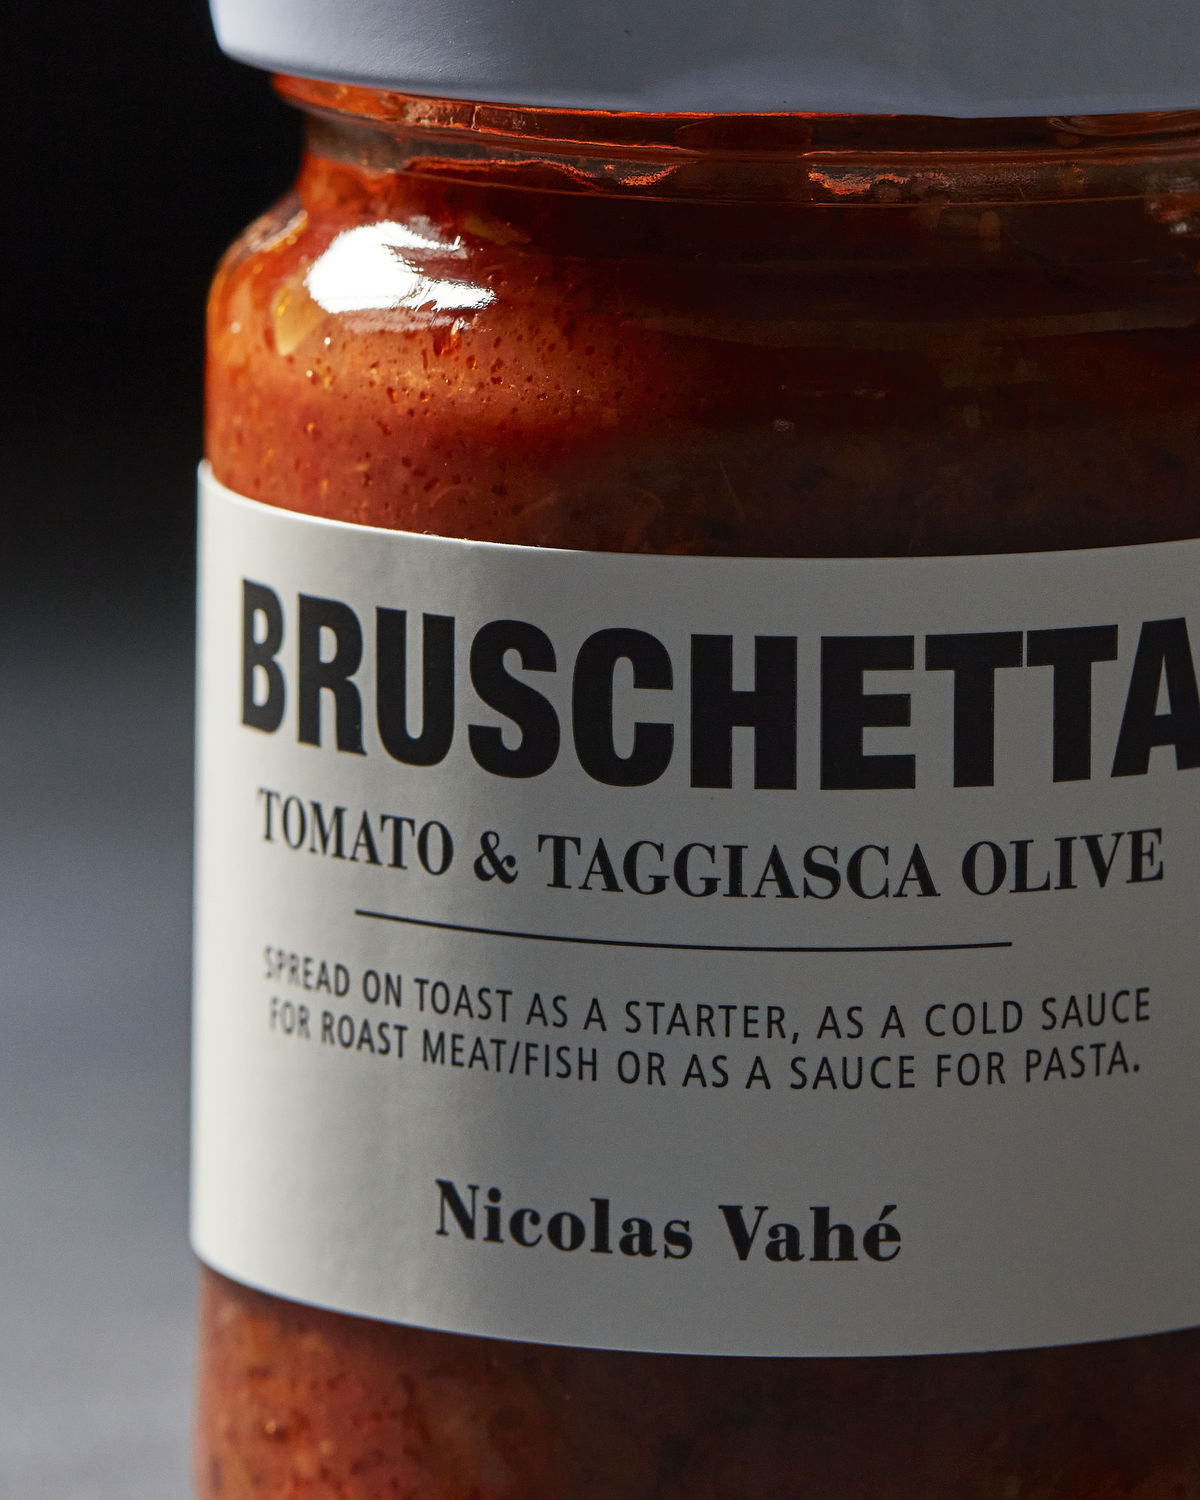 Bruschetta, Tomato & Taggiasca Olive